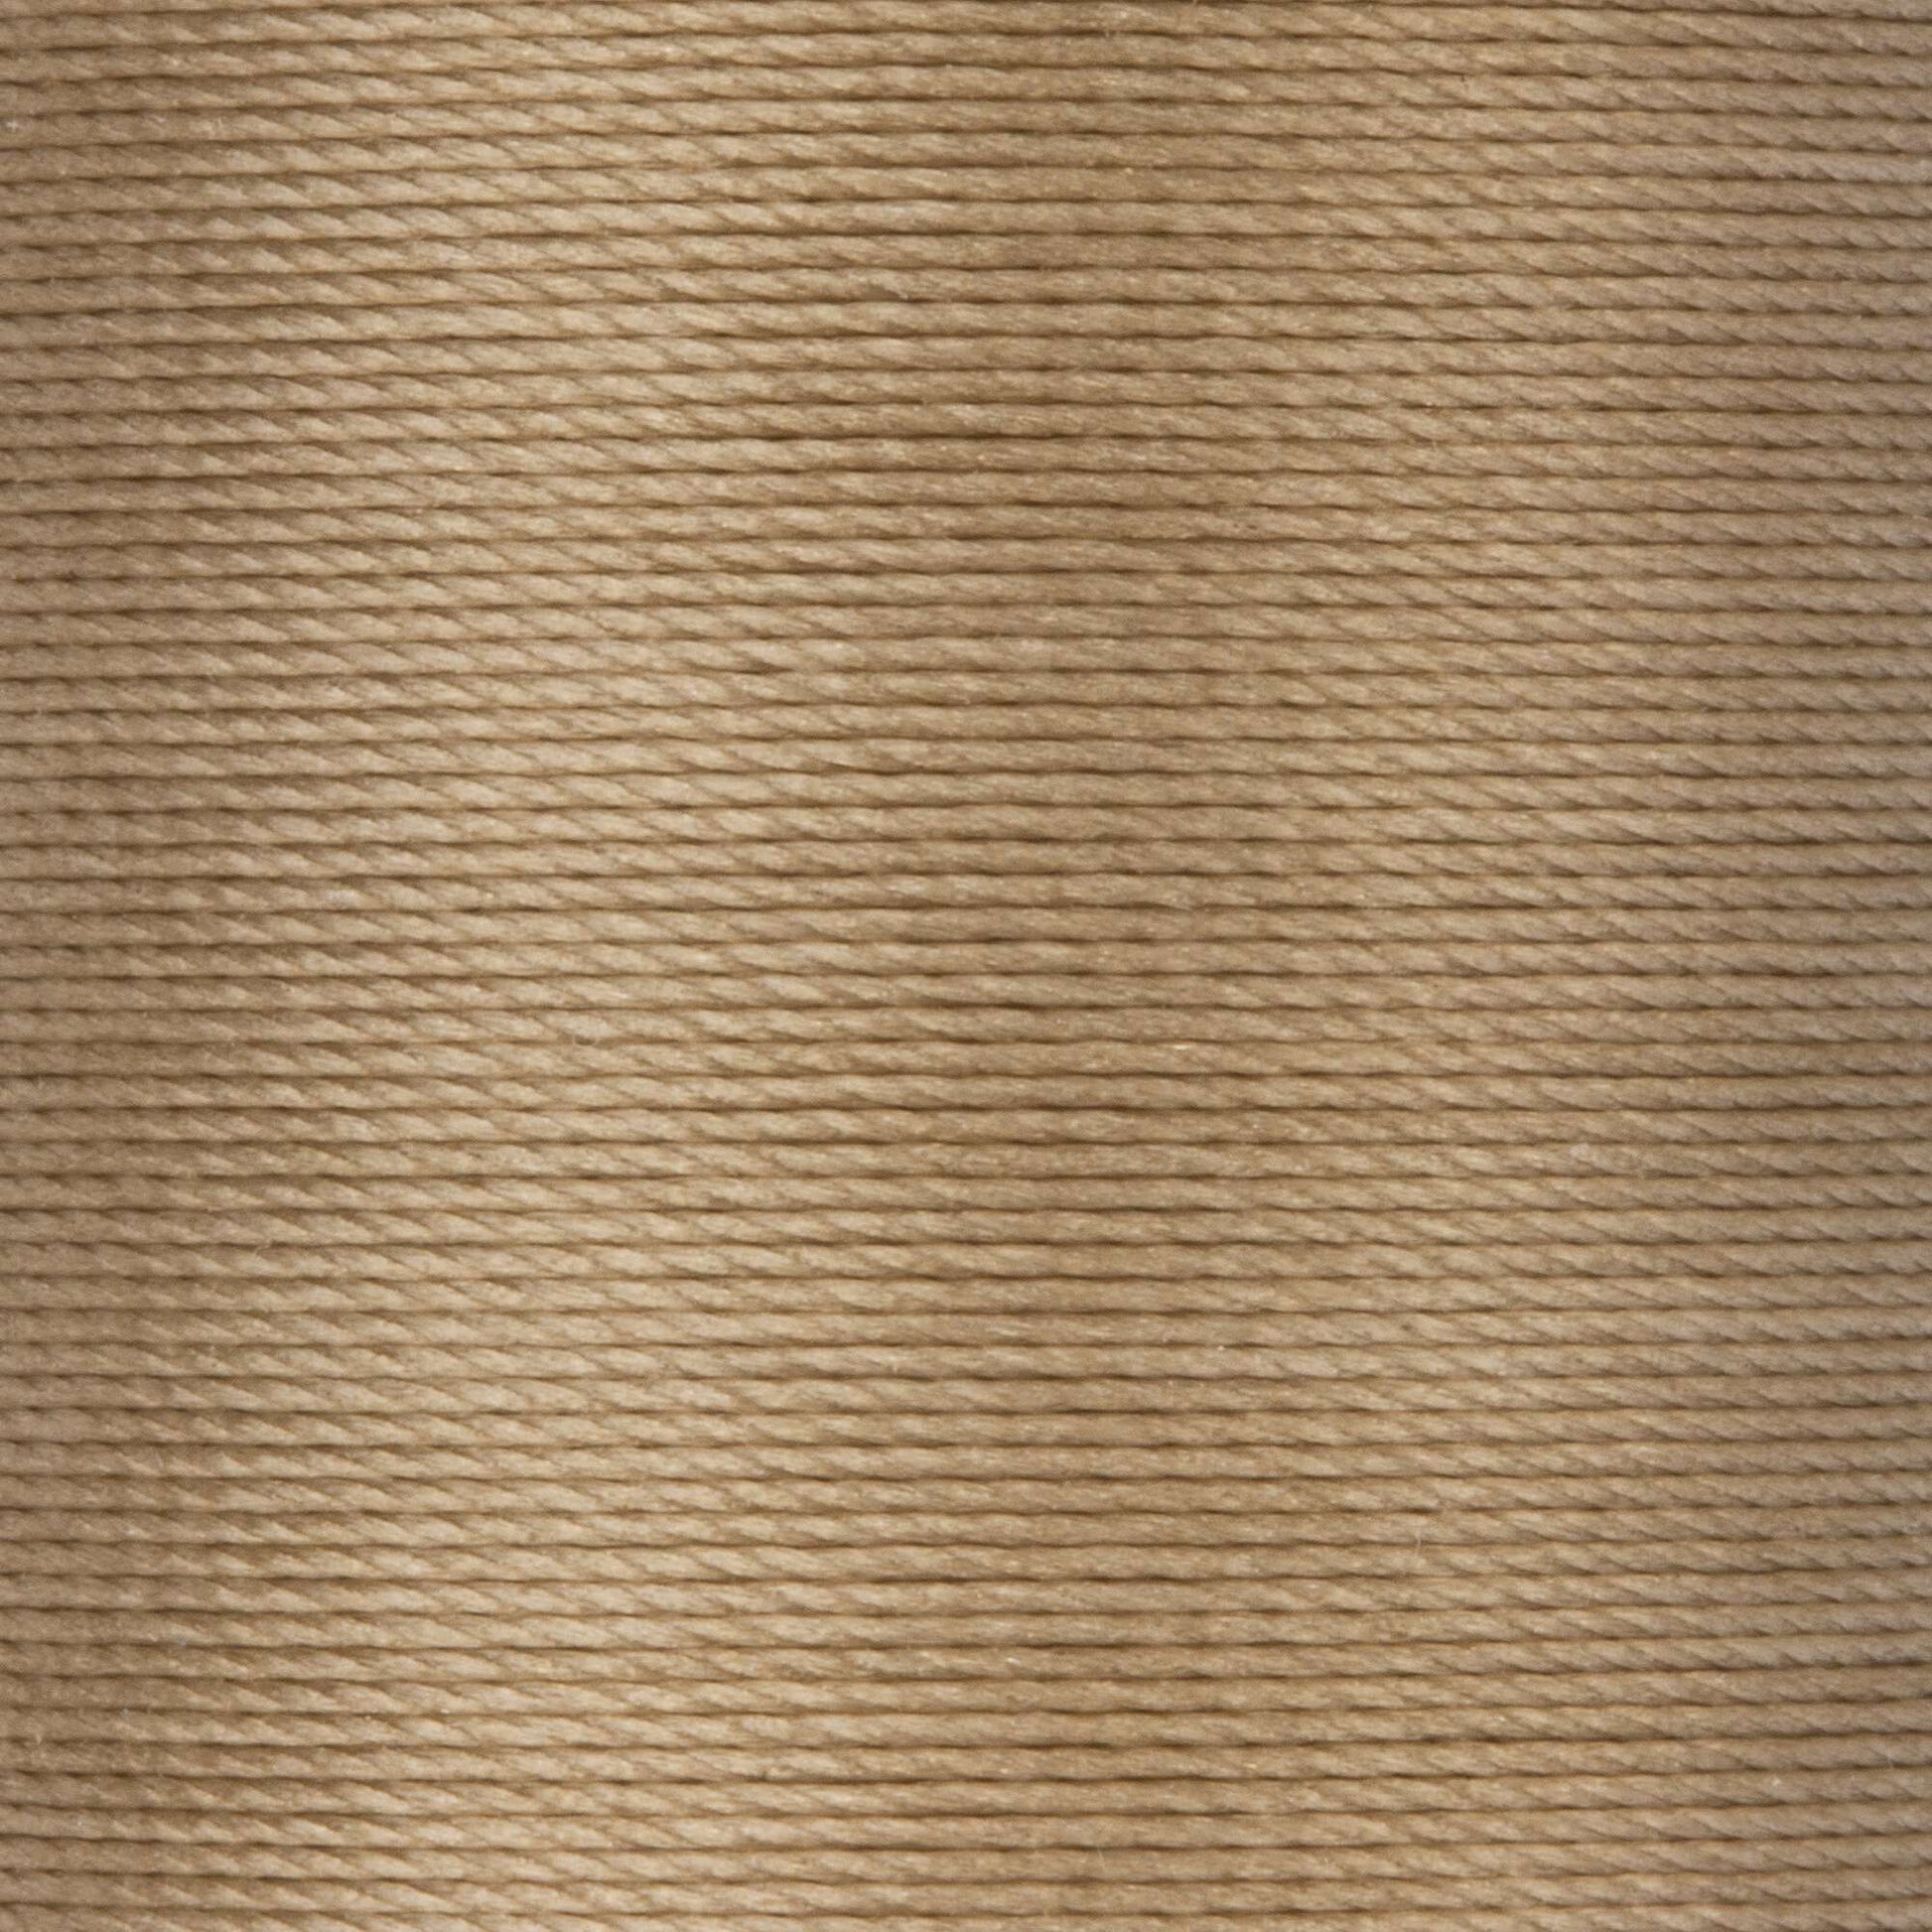 Coats & Clark Extra Strong Upholstery Thread (150 Yards)